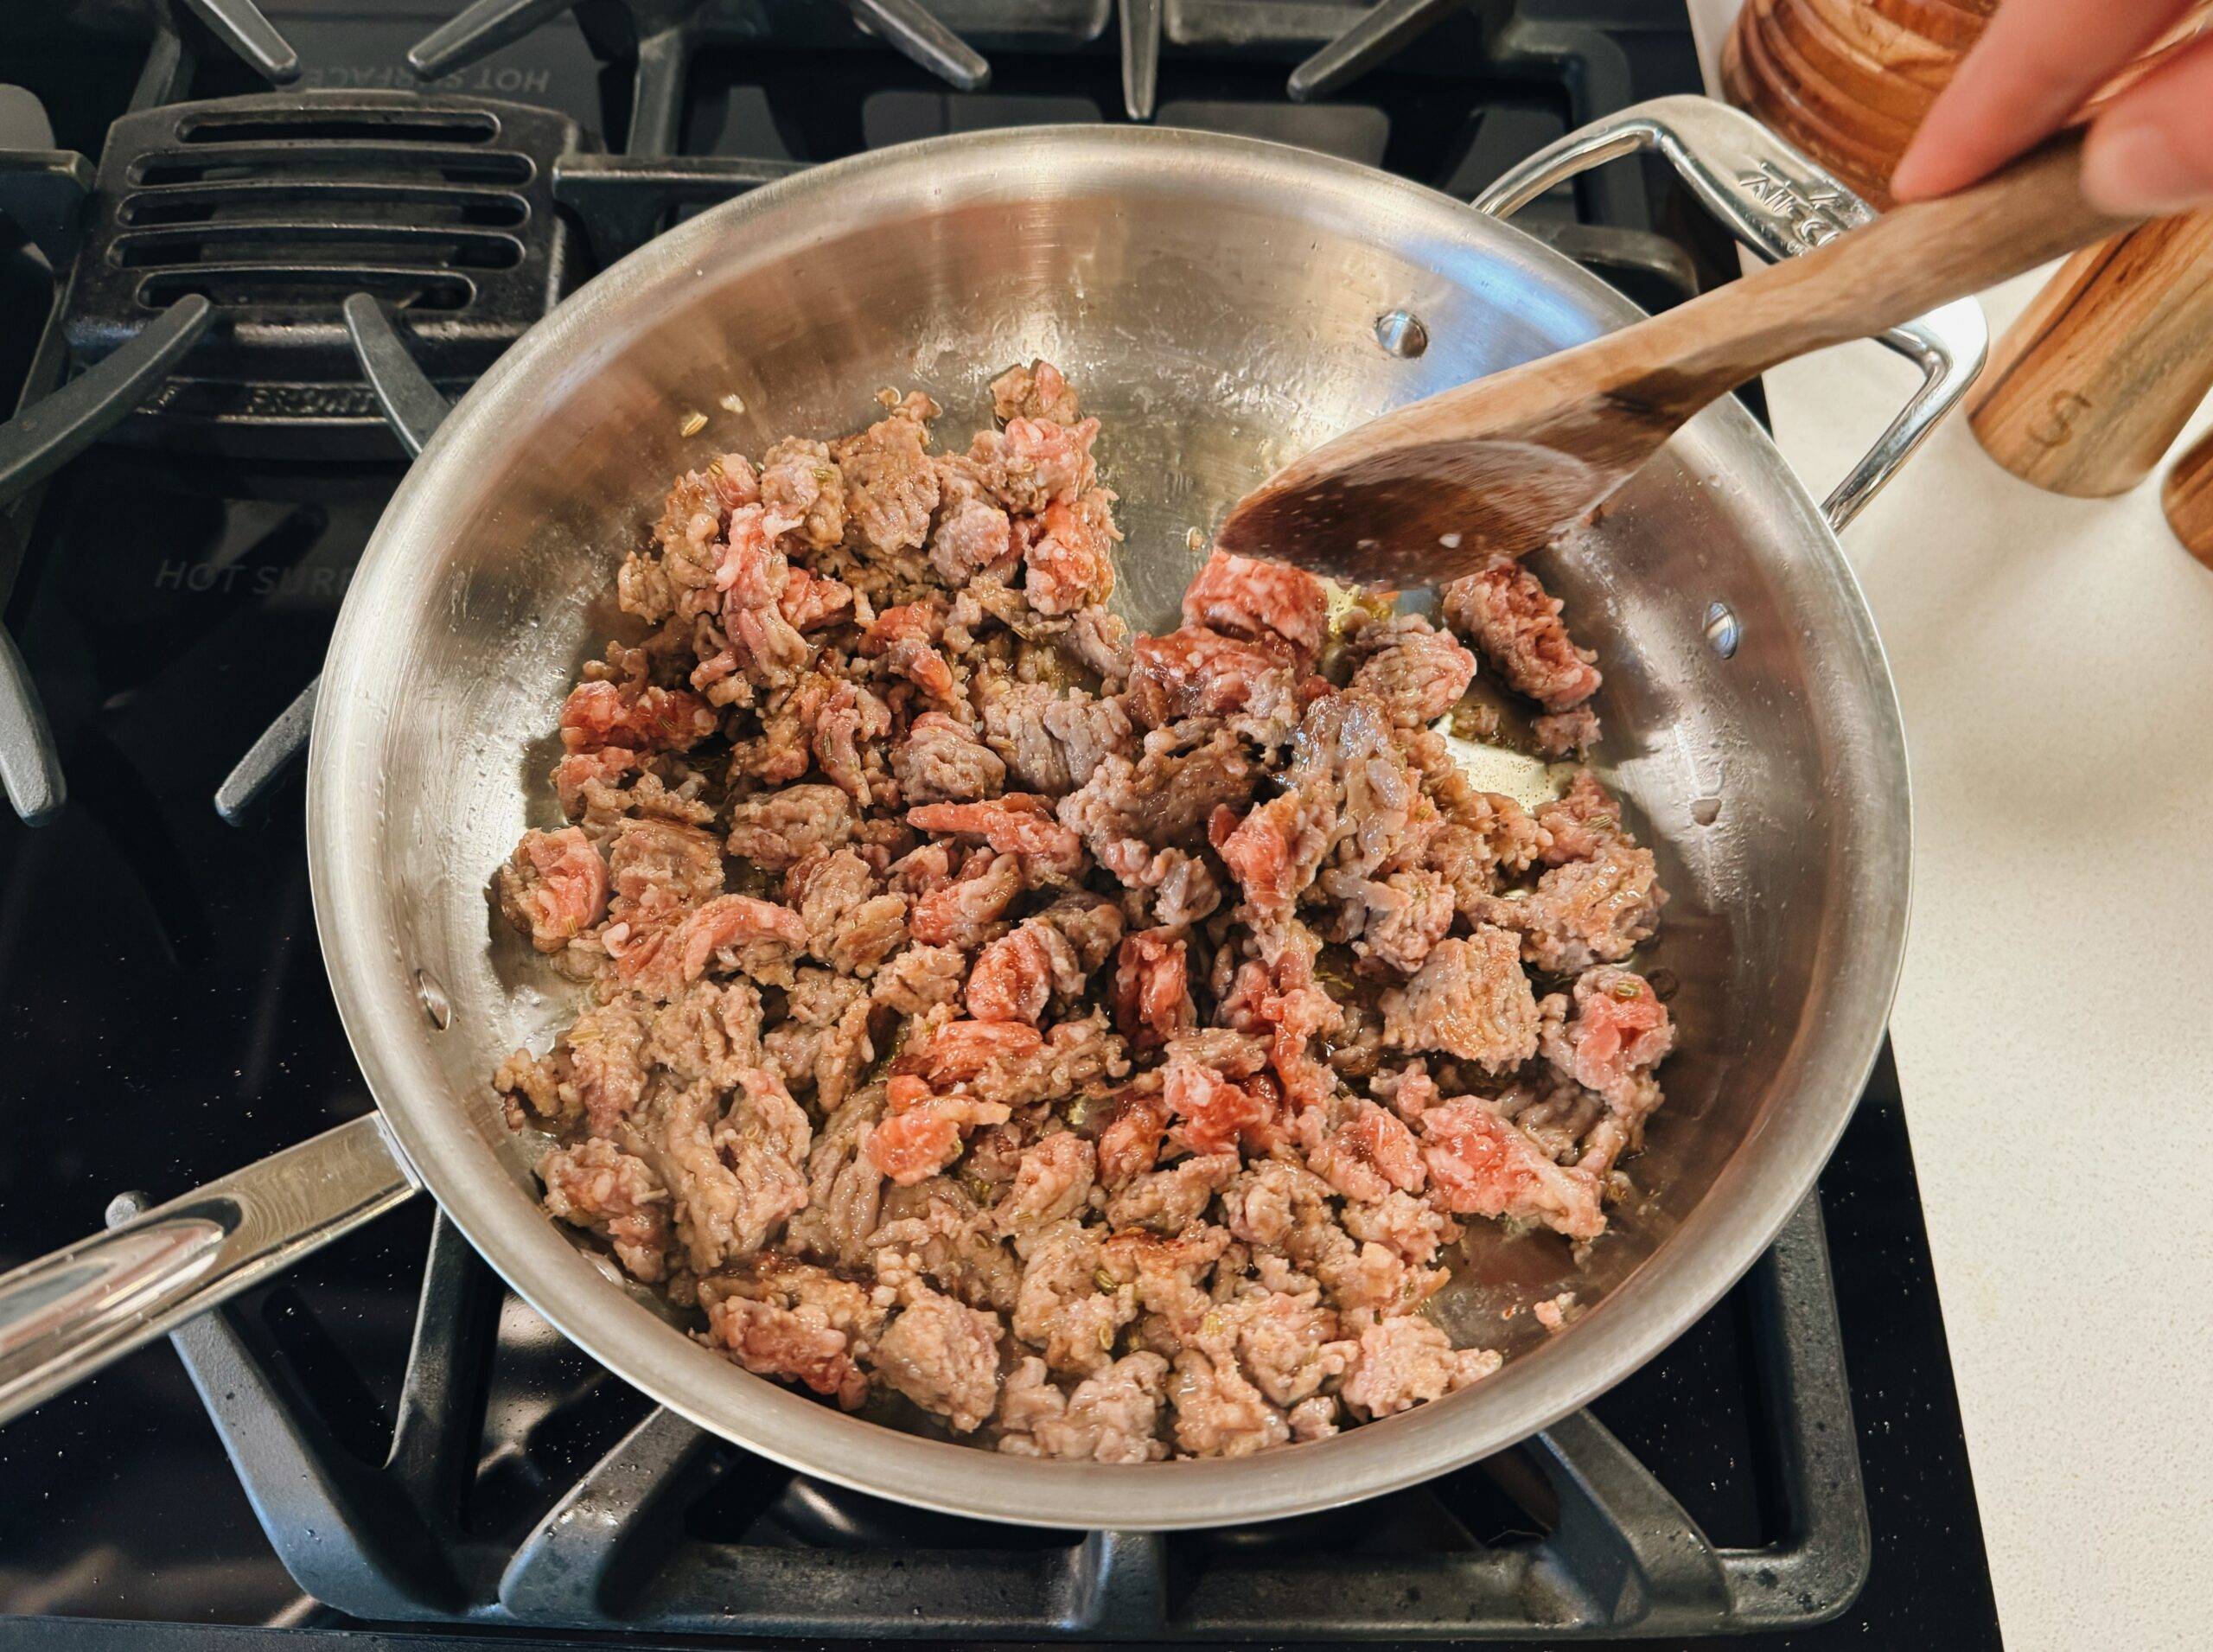 Browning Italian sausage in a pan